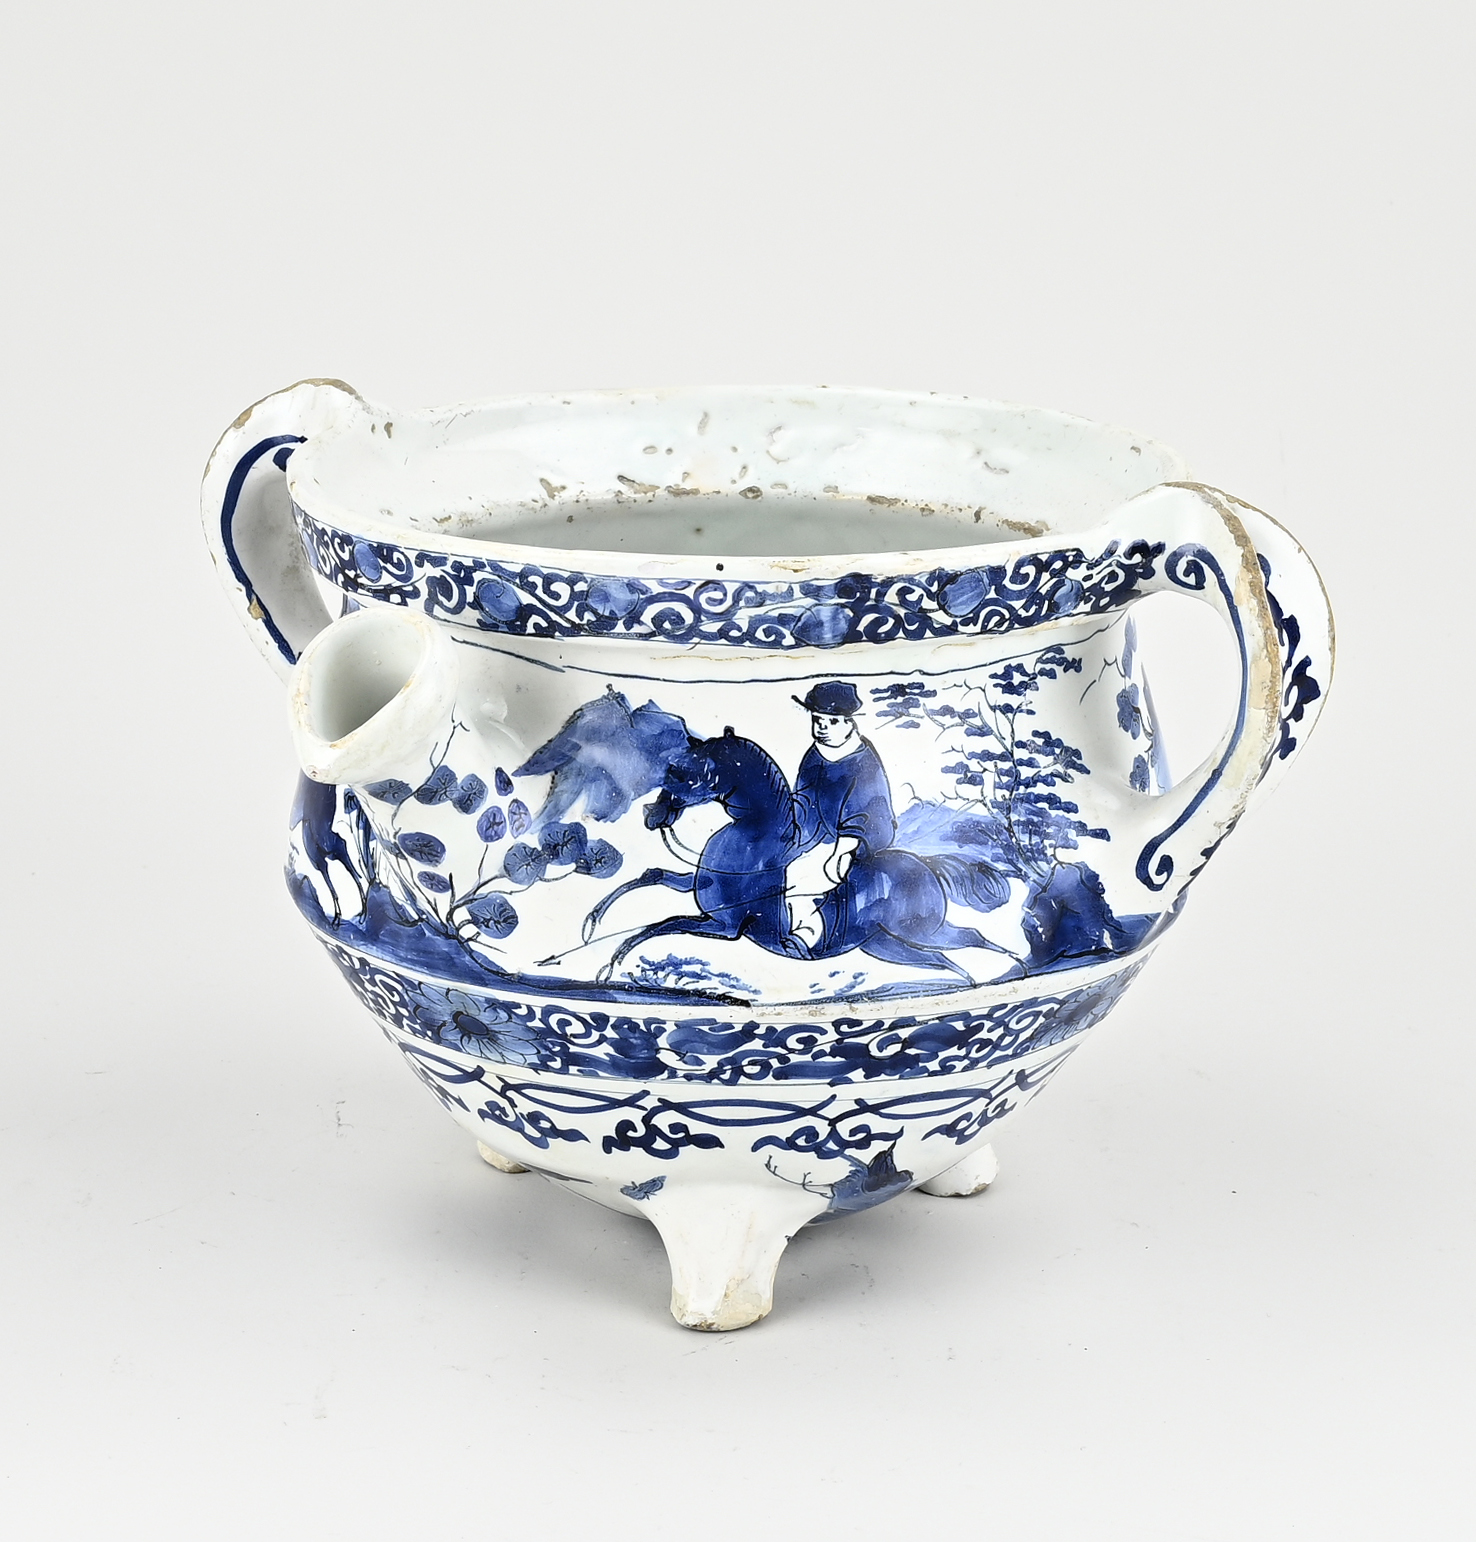 Rare 17th - 18th century Delft fayence cream pot with handles and chinoiserie decor.